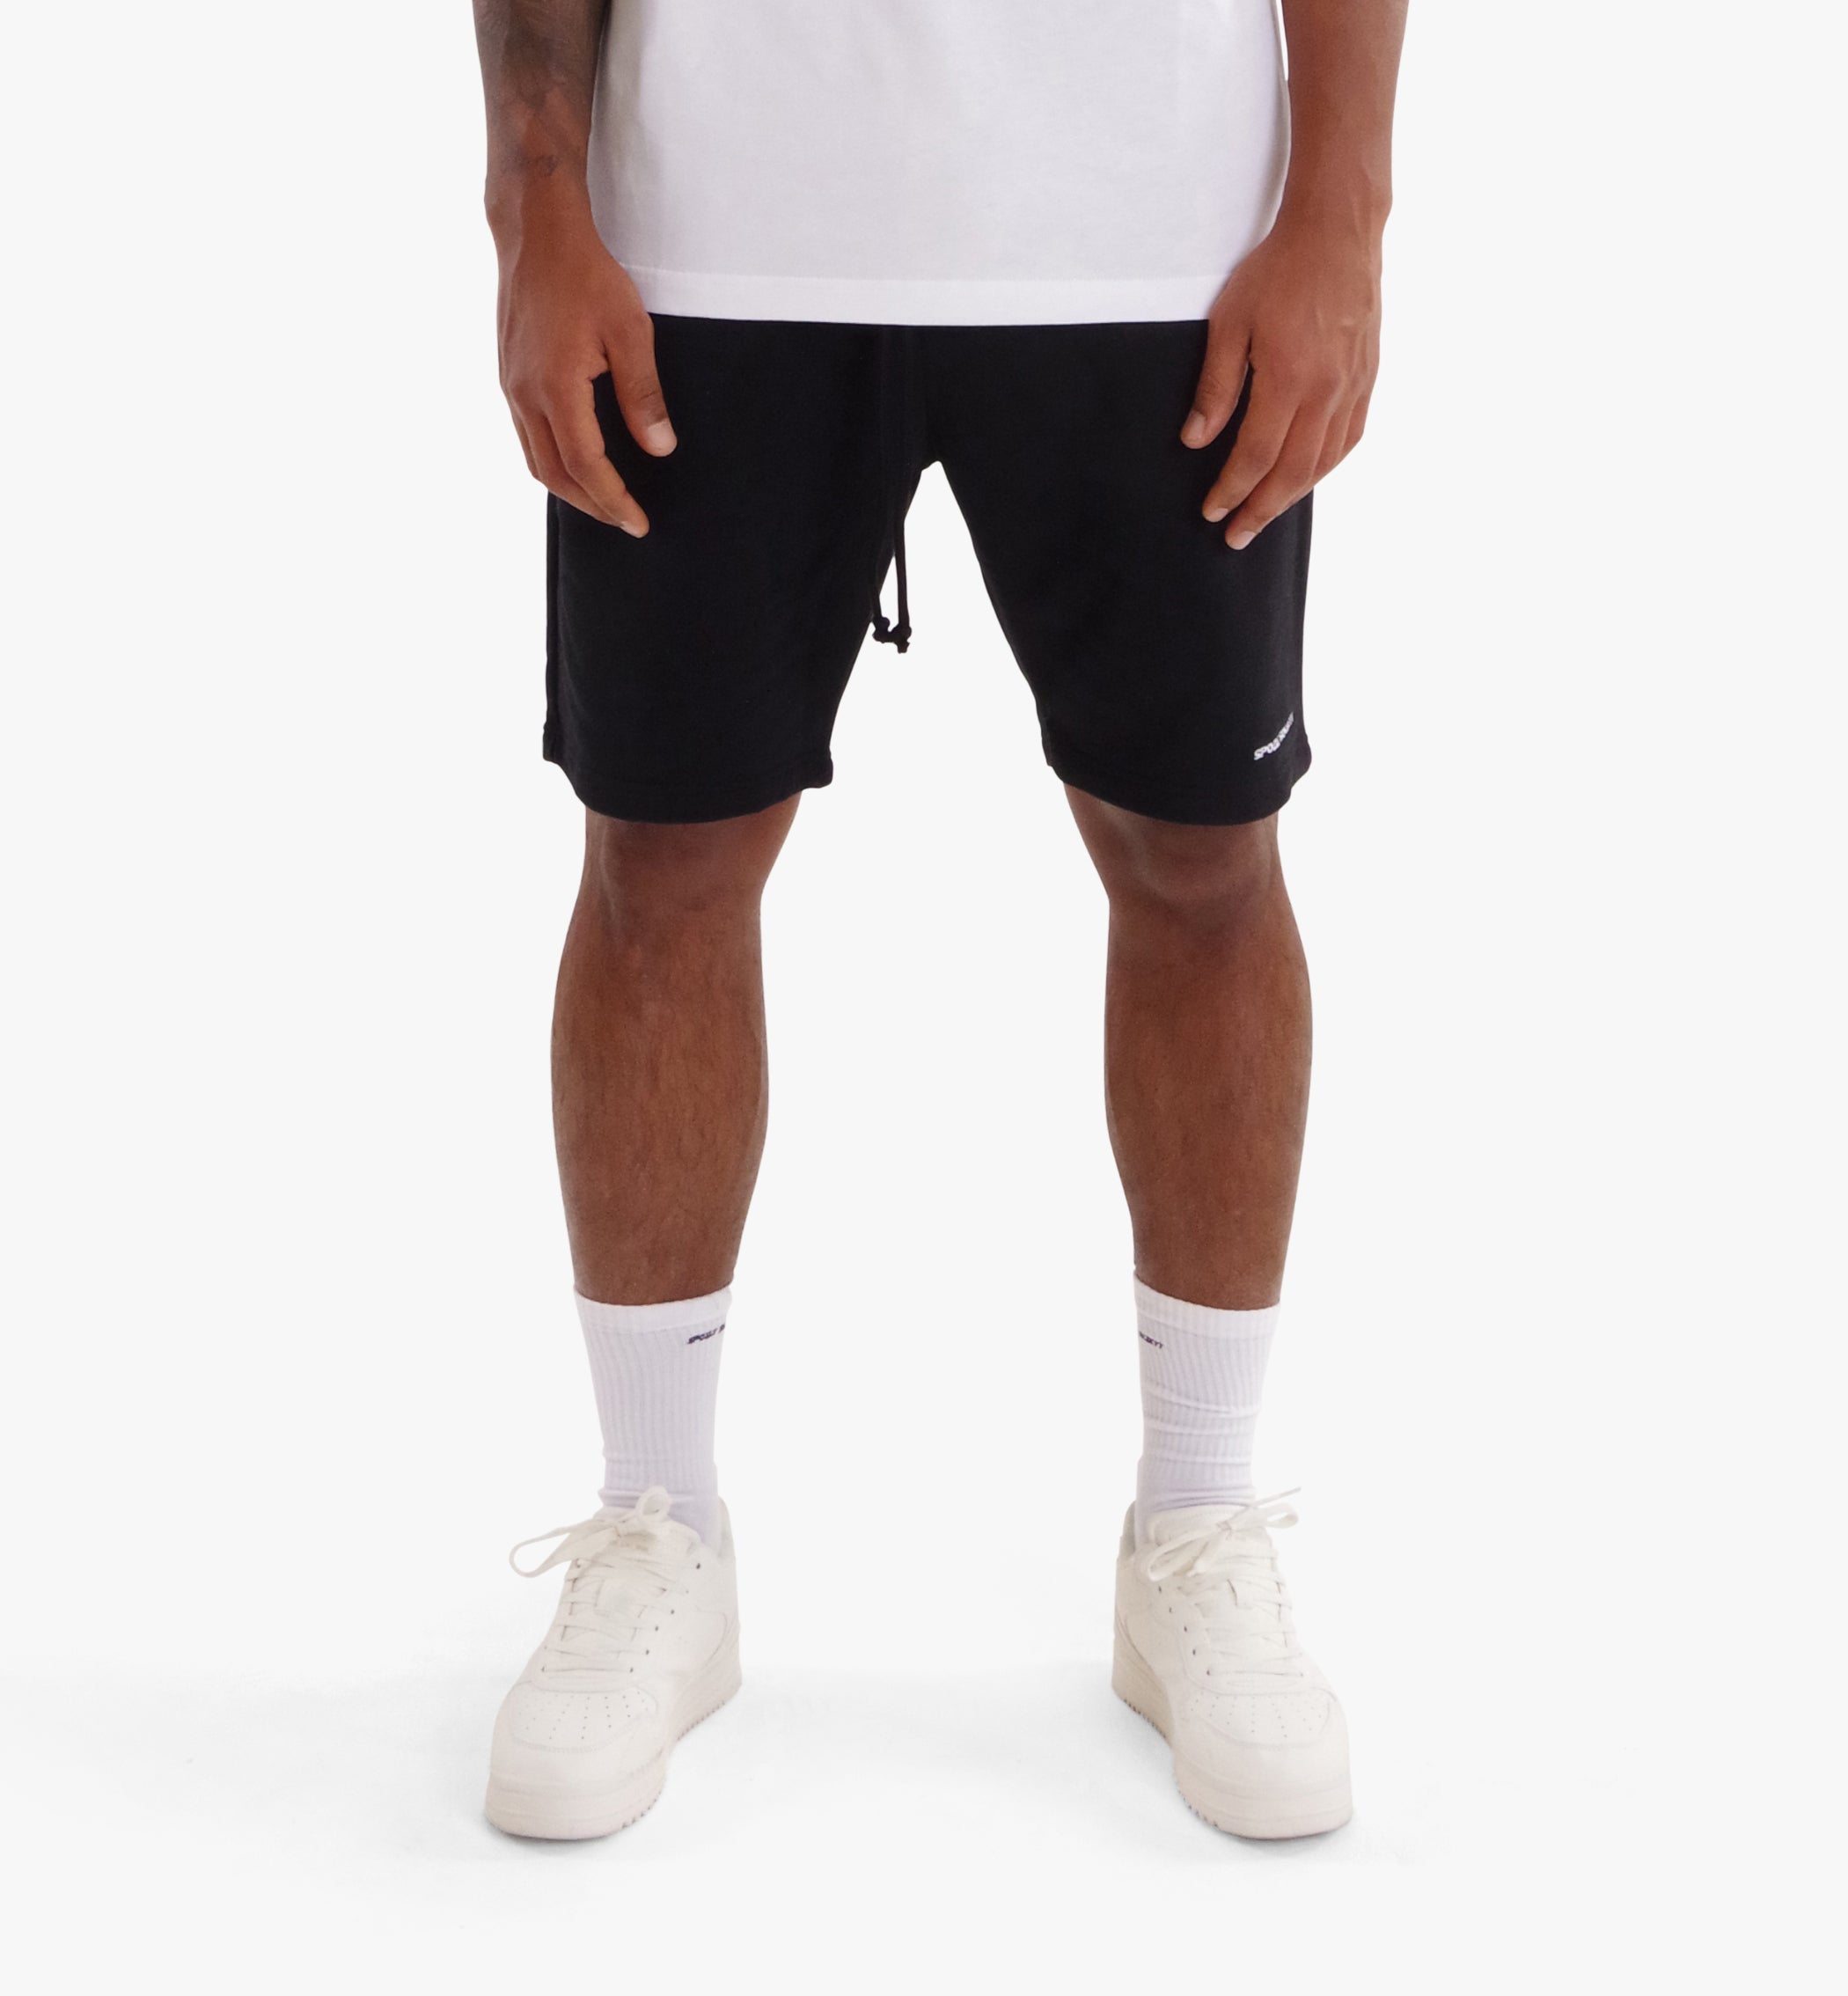 Shorts 1.0 Basic Black